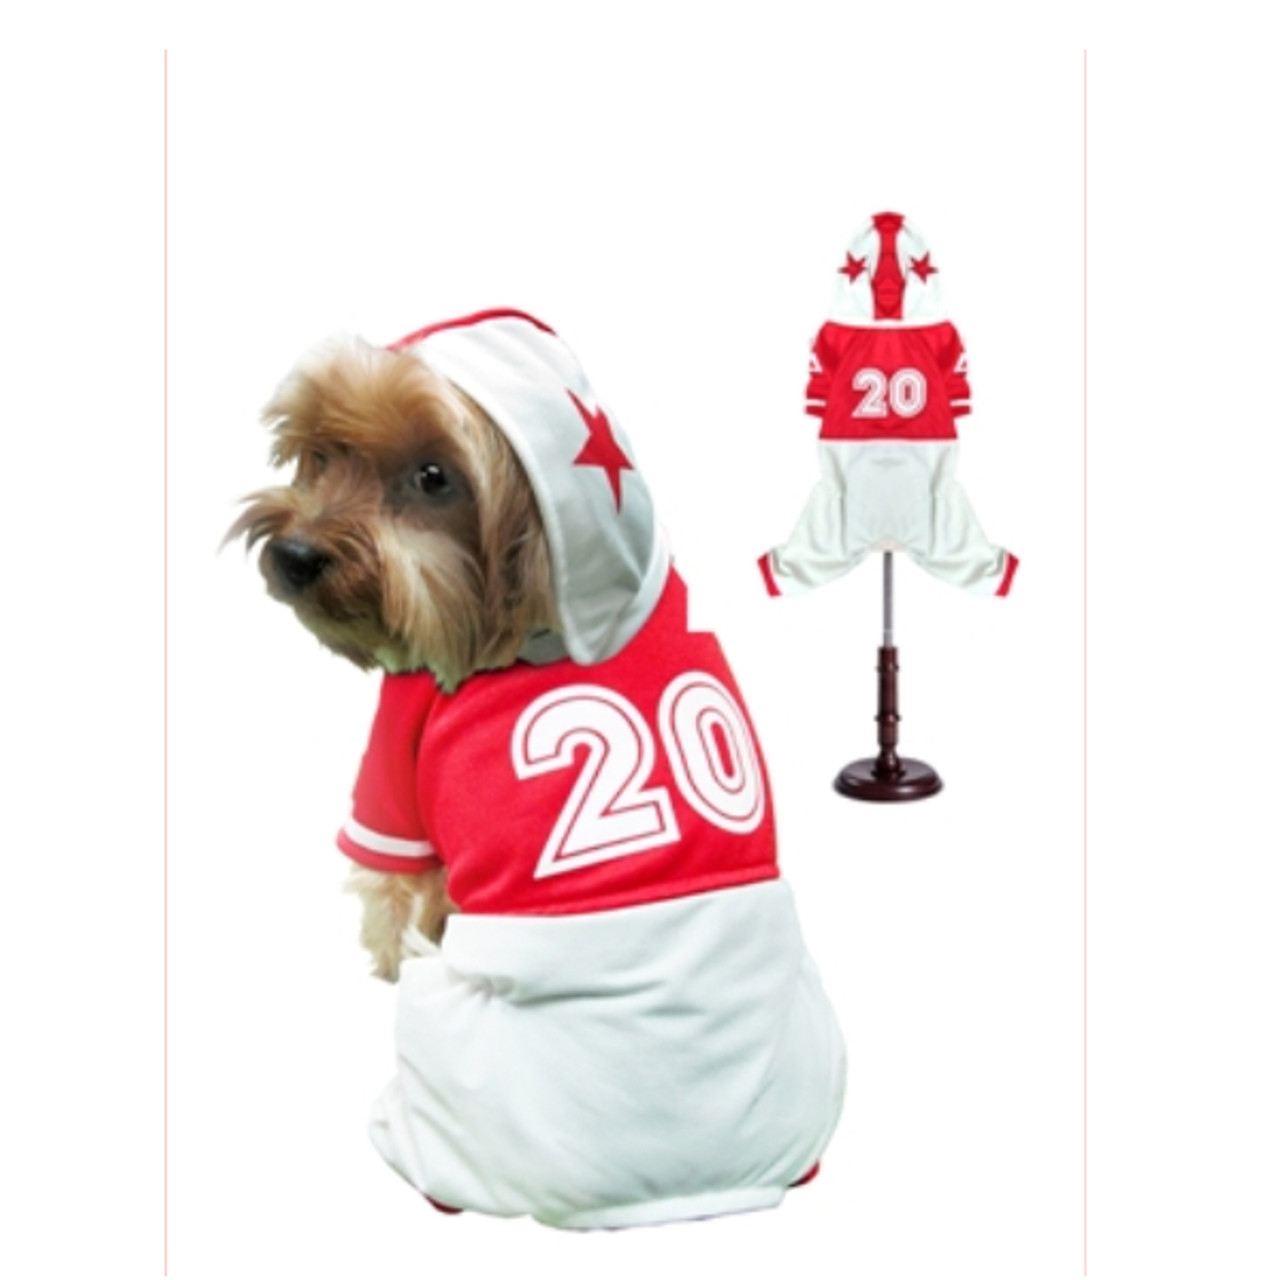 Louisville Cardinals sports pet supplies for dogs